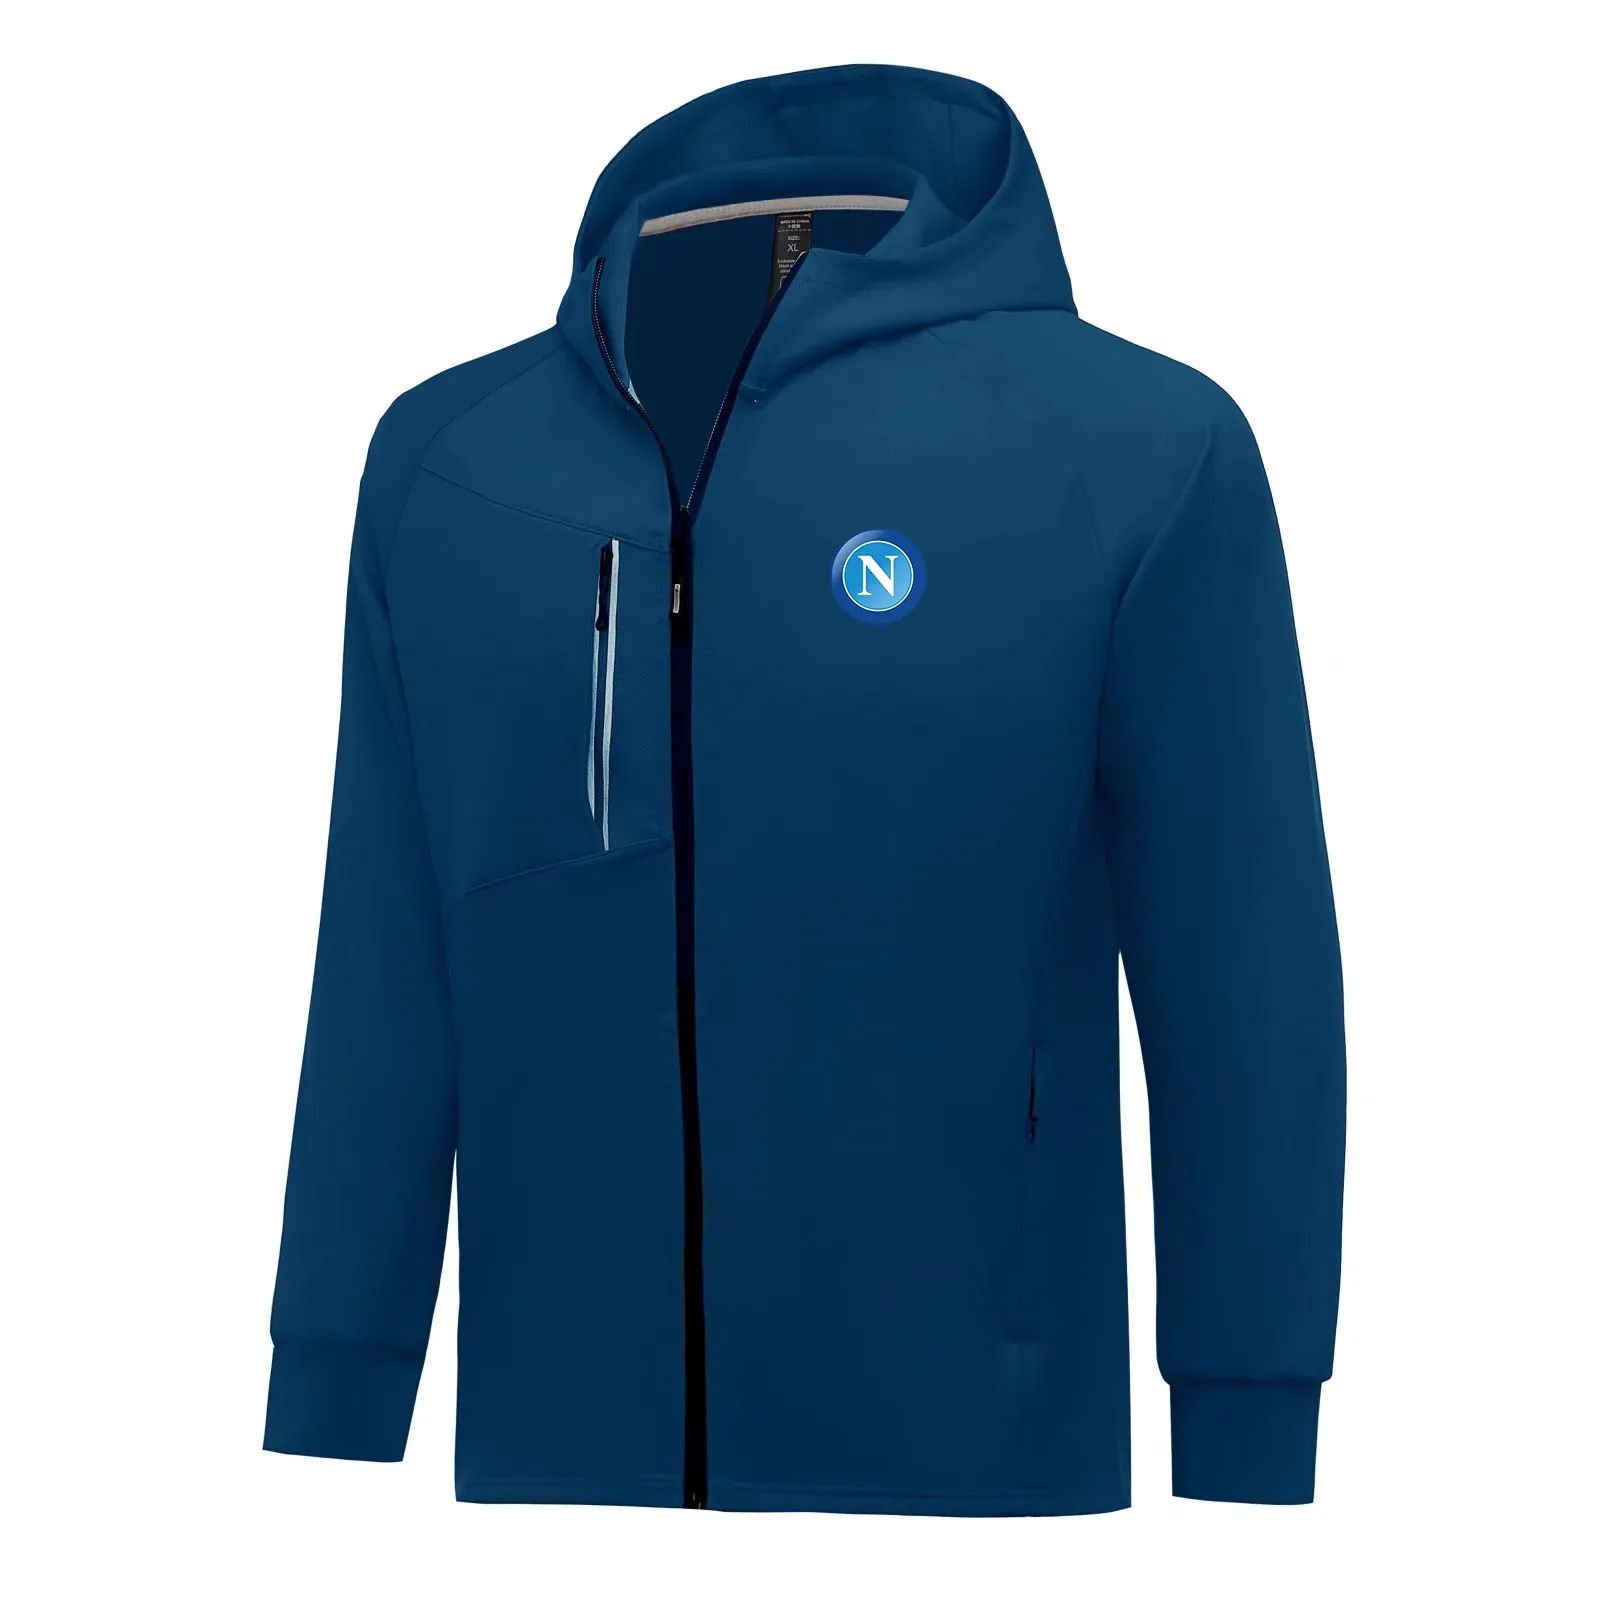 S.S.C. Napoli Men Jackets Autumn warm coat leisure outdoor jogging hooded sweatshirt Full zipper long sleeve Casual sports jacket